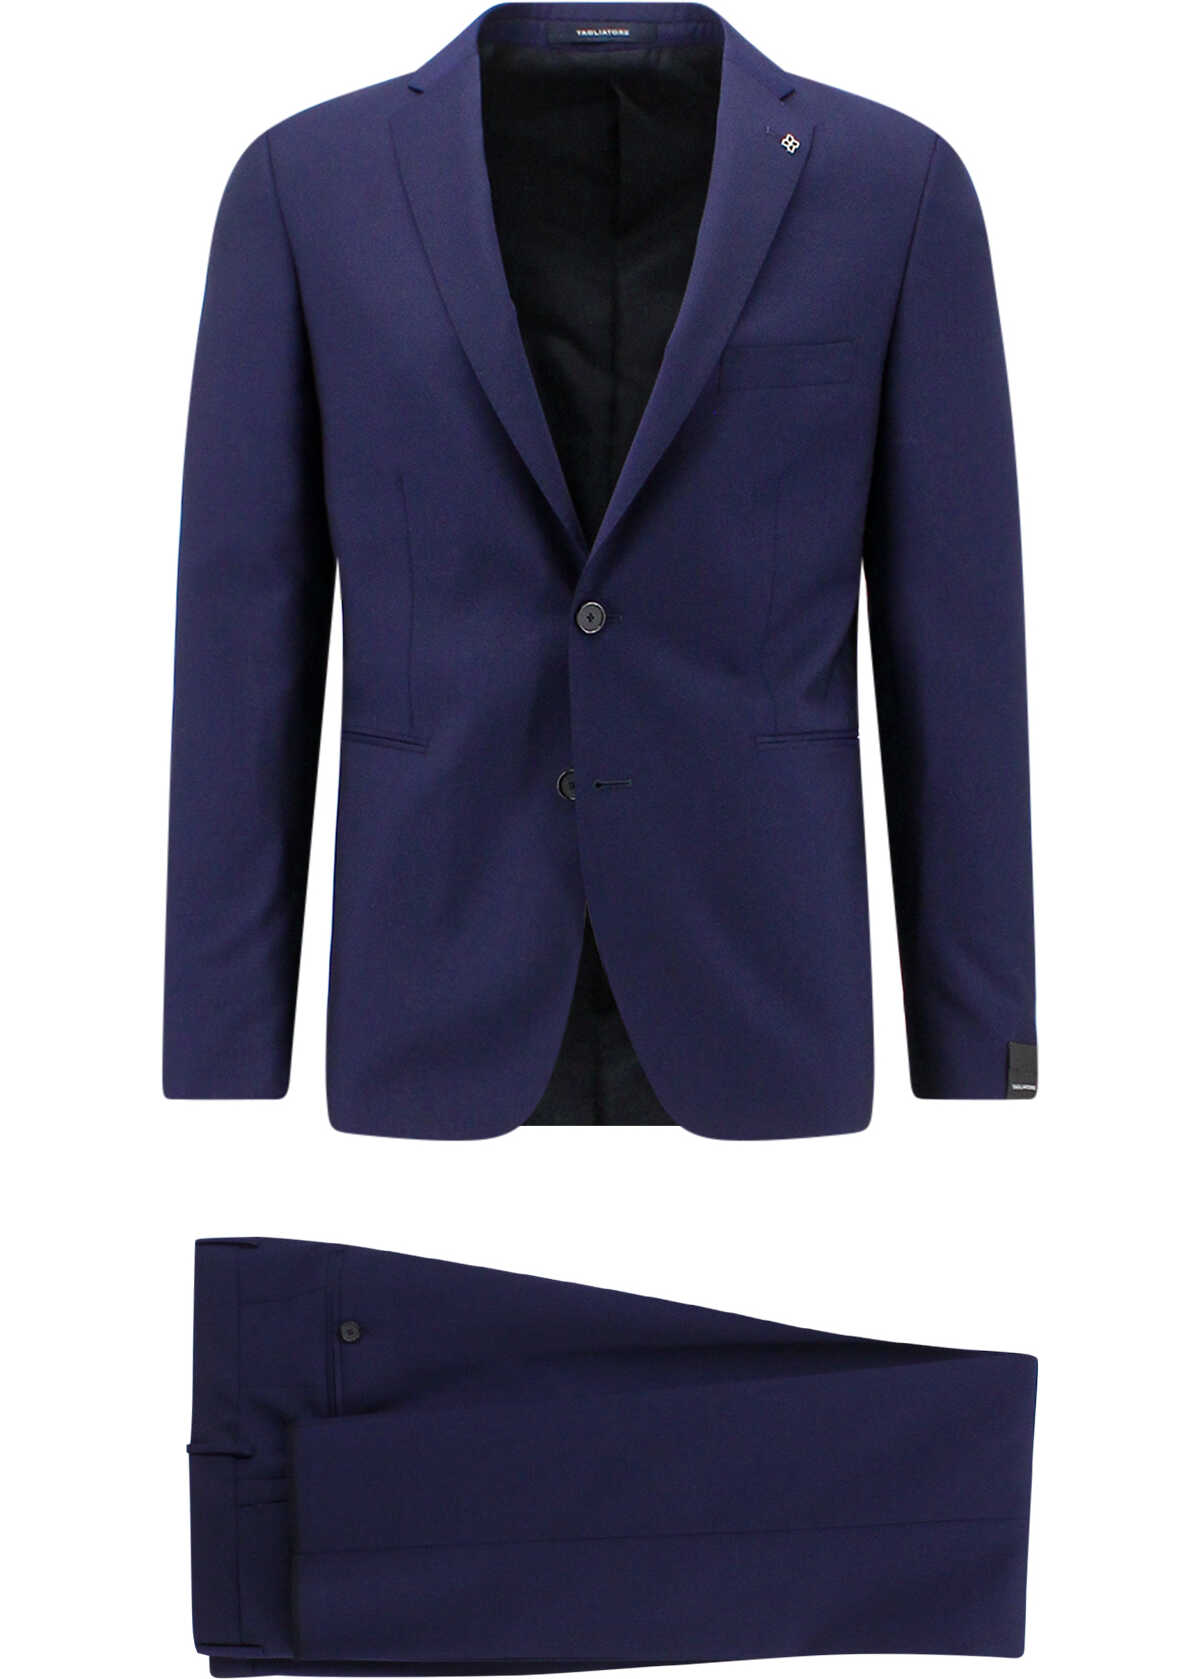 Tagliatore Suit Blue b-mall.ro